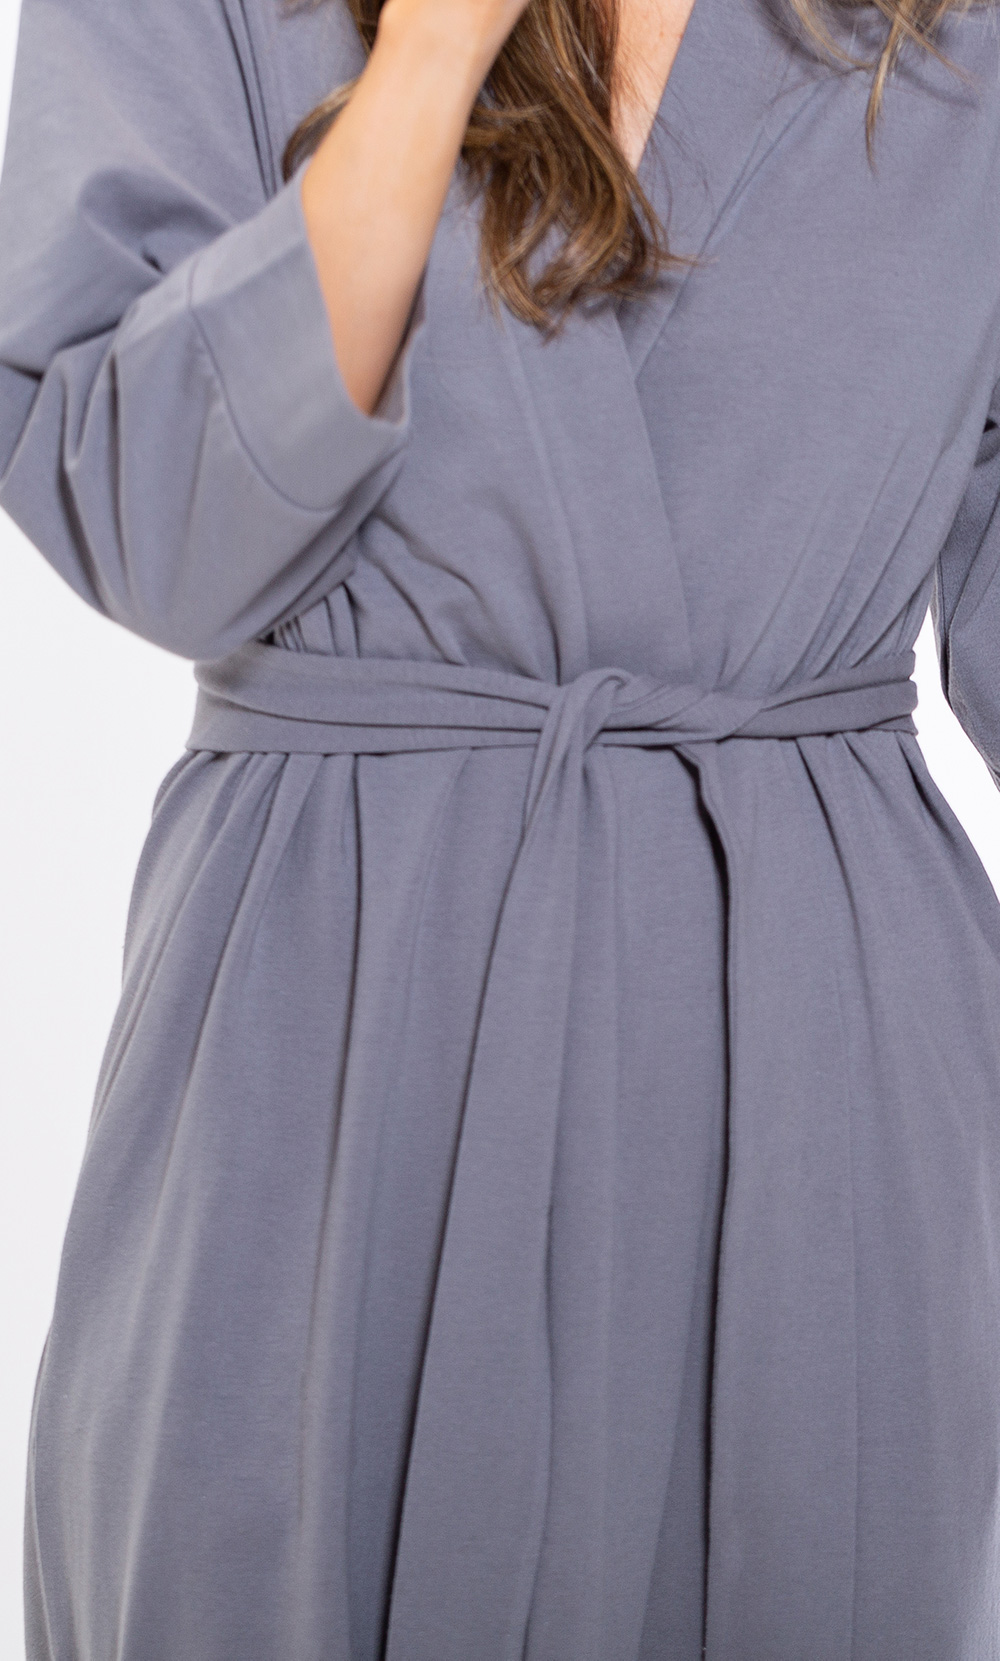 Cotton Charcoal Gray Knit Kimono Robe-Robemart.com